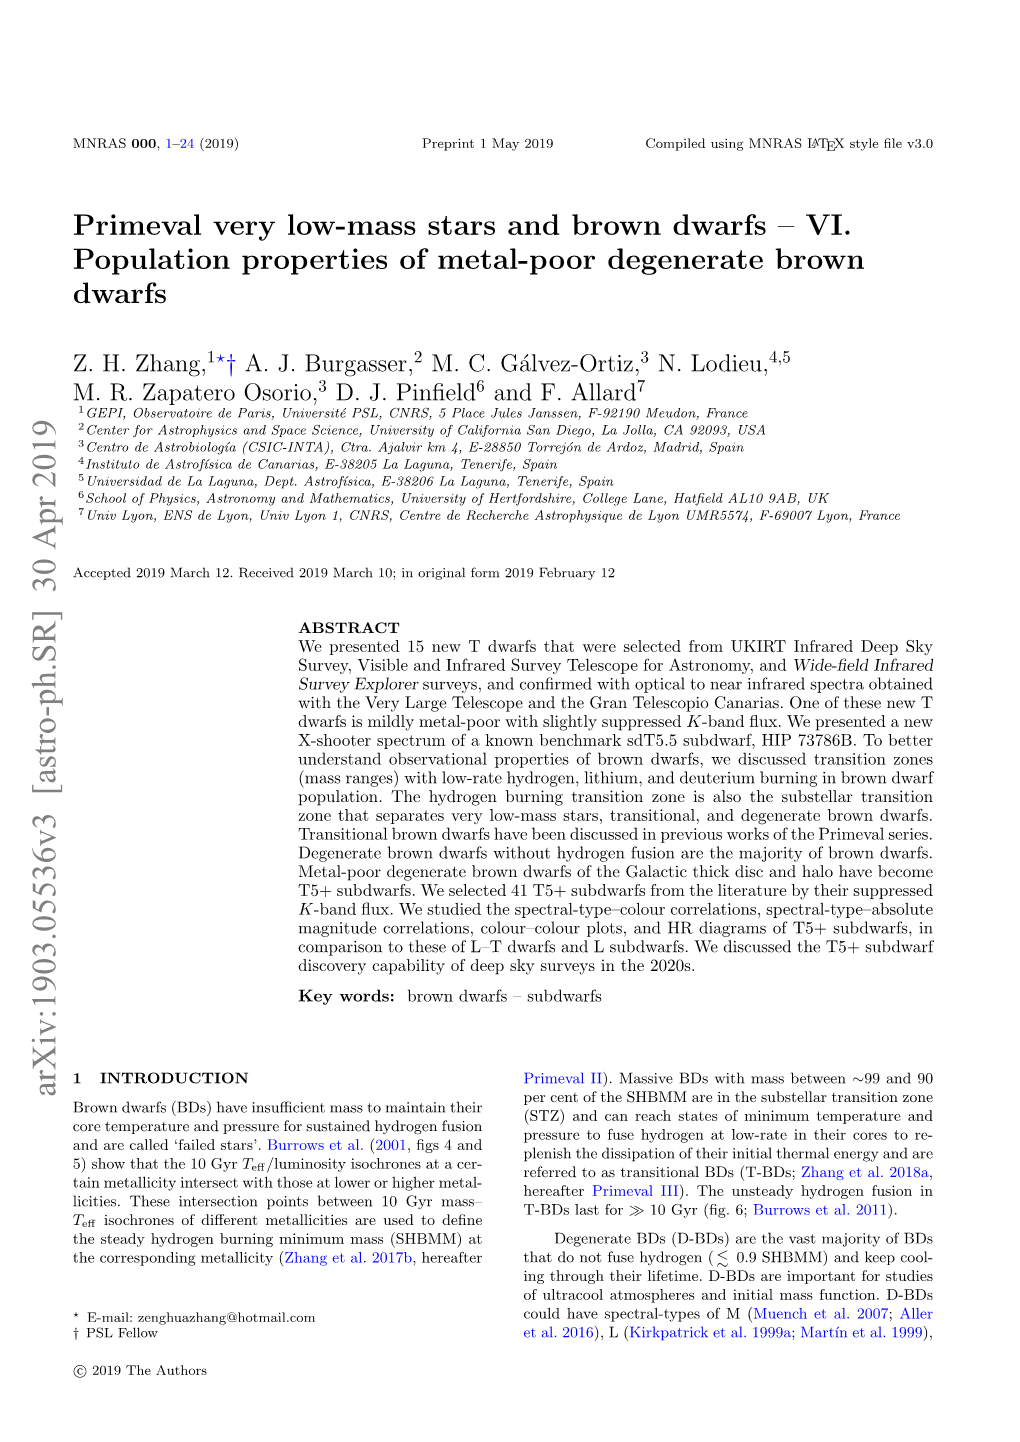 VI. Population Properties of Metal-Poor Degenerate Brown Dwarfs